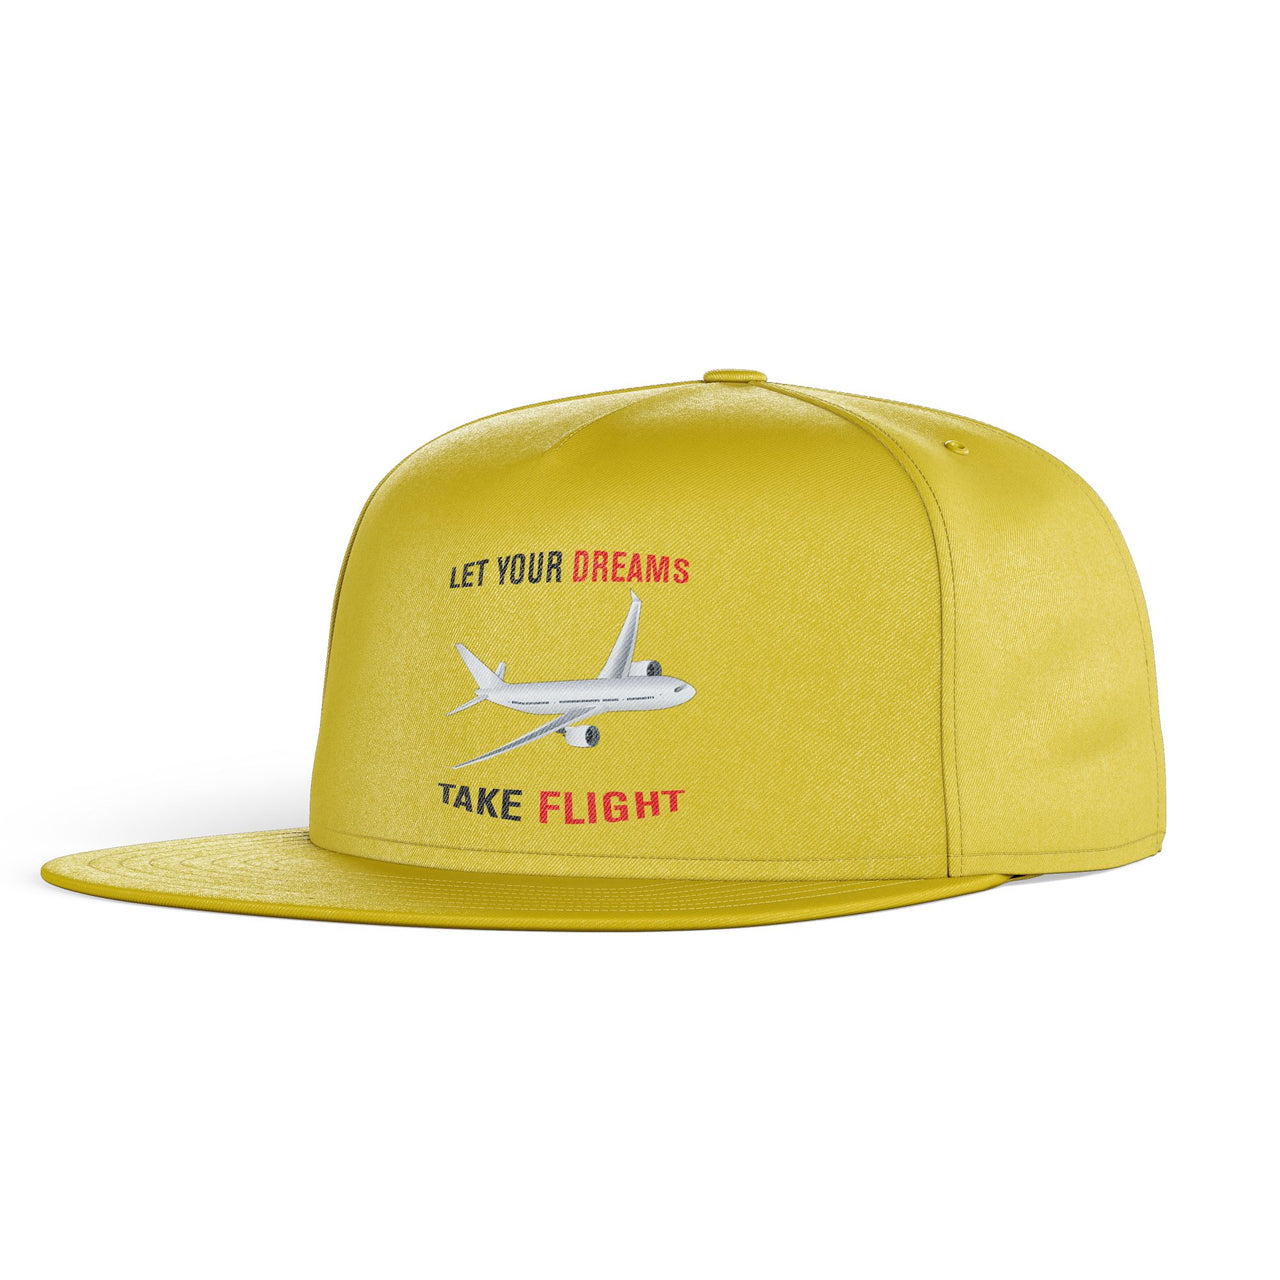 Let Your Dreams Take Flight Designed Snapback Caps & Hats